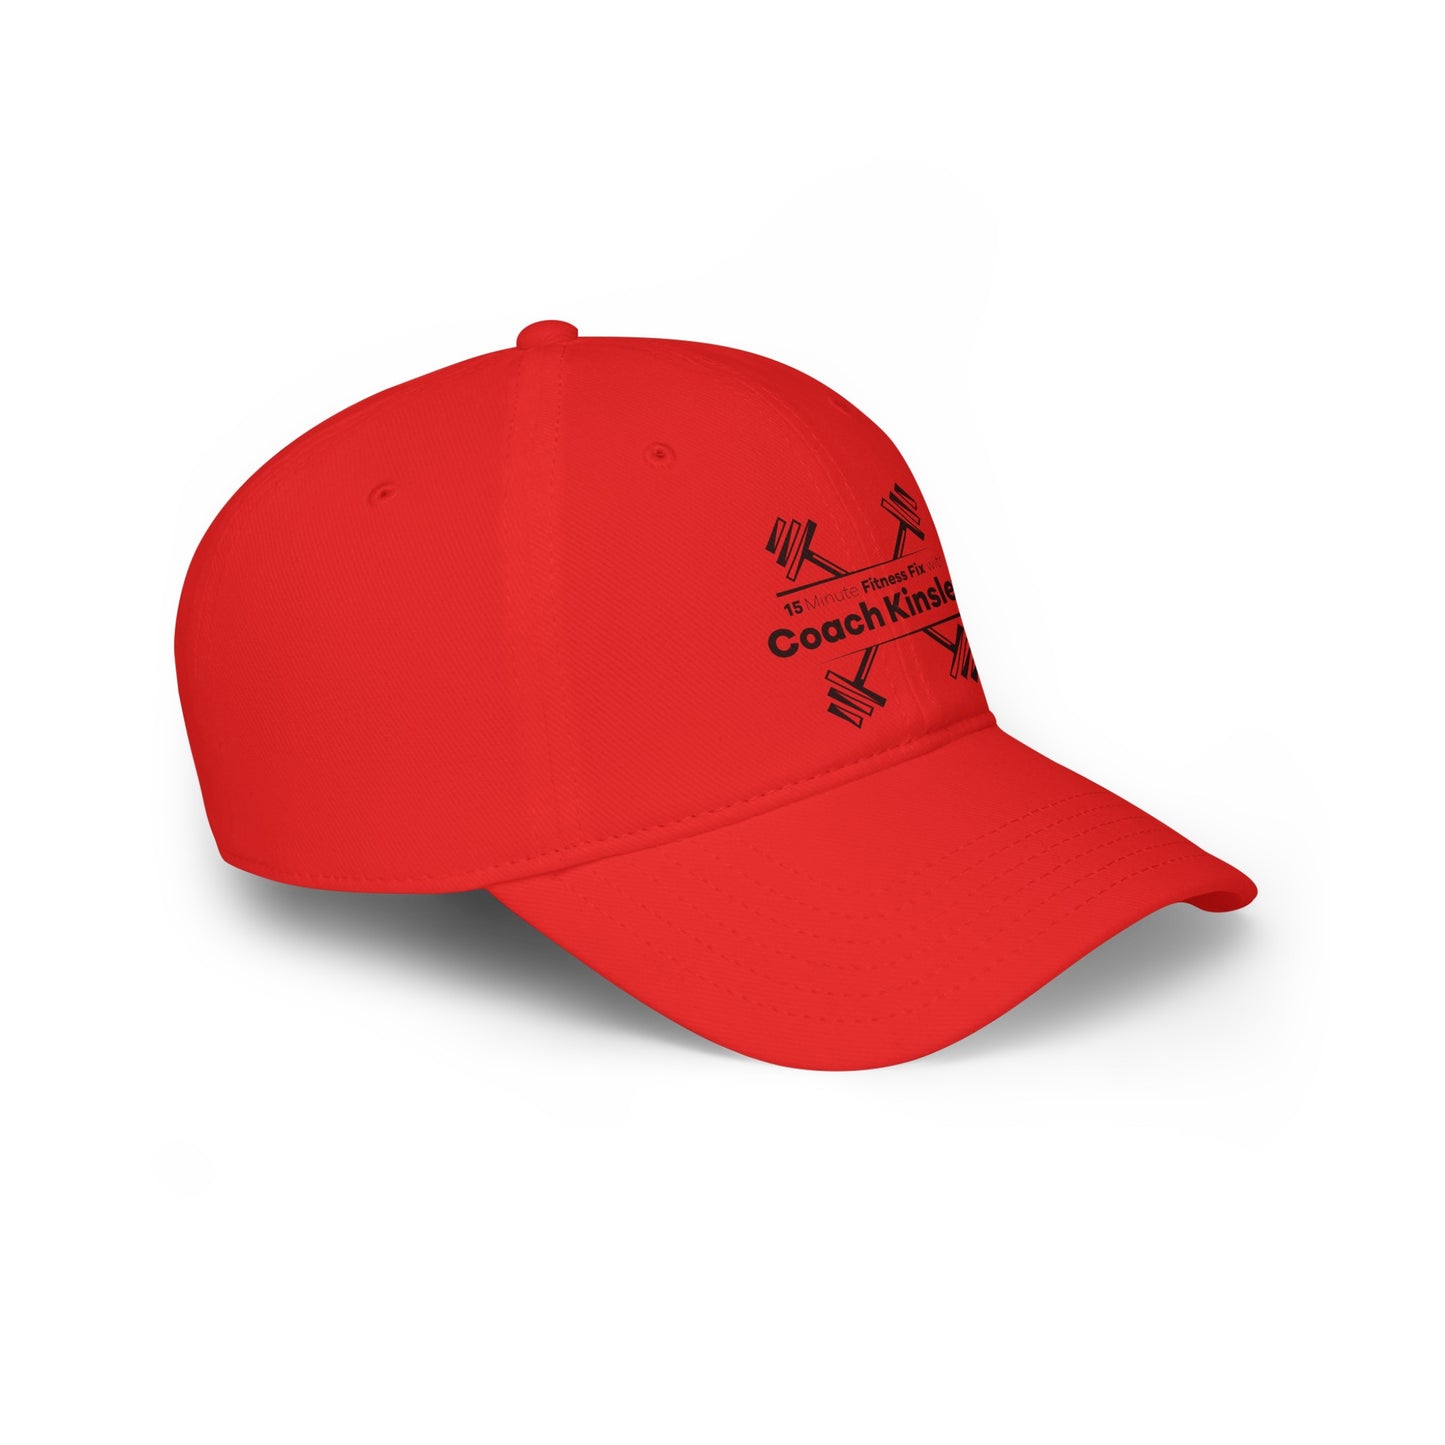 Baseball Cap (Red, Black, Royal, Navy, White)